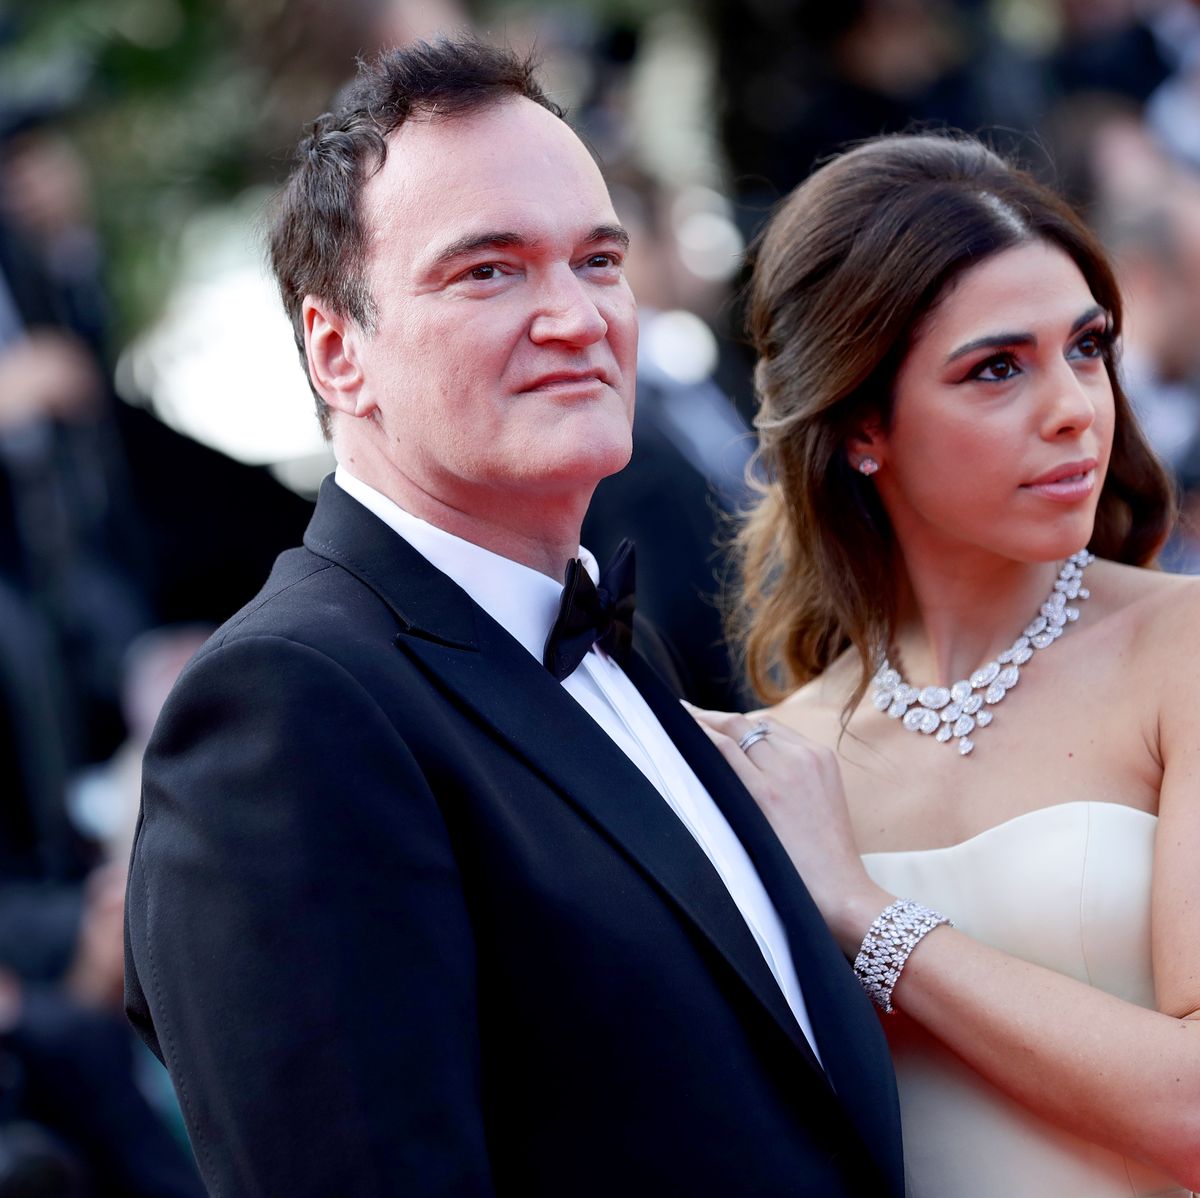 Quentin Tarantino fiancé : A 54 ans, il va épouser Daniela Pick